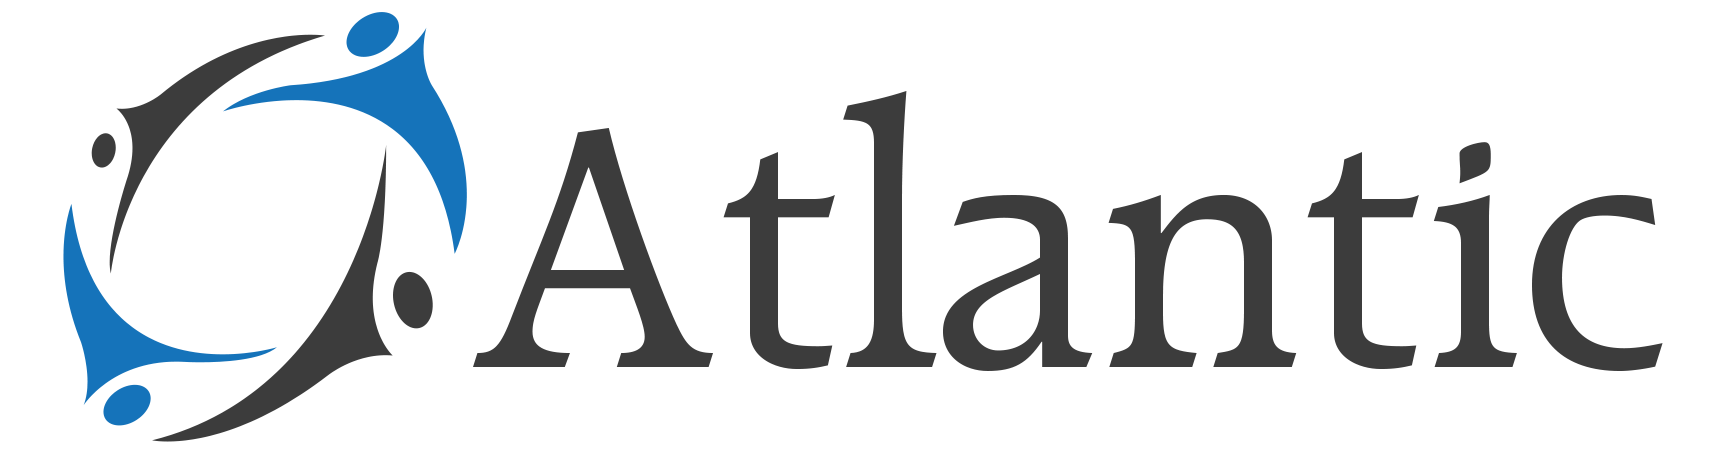 Atlantic-Training-Logo-2021-Final-2